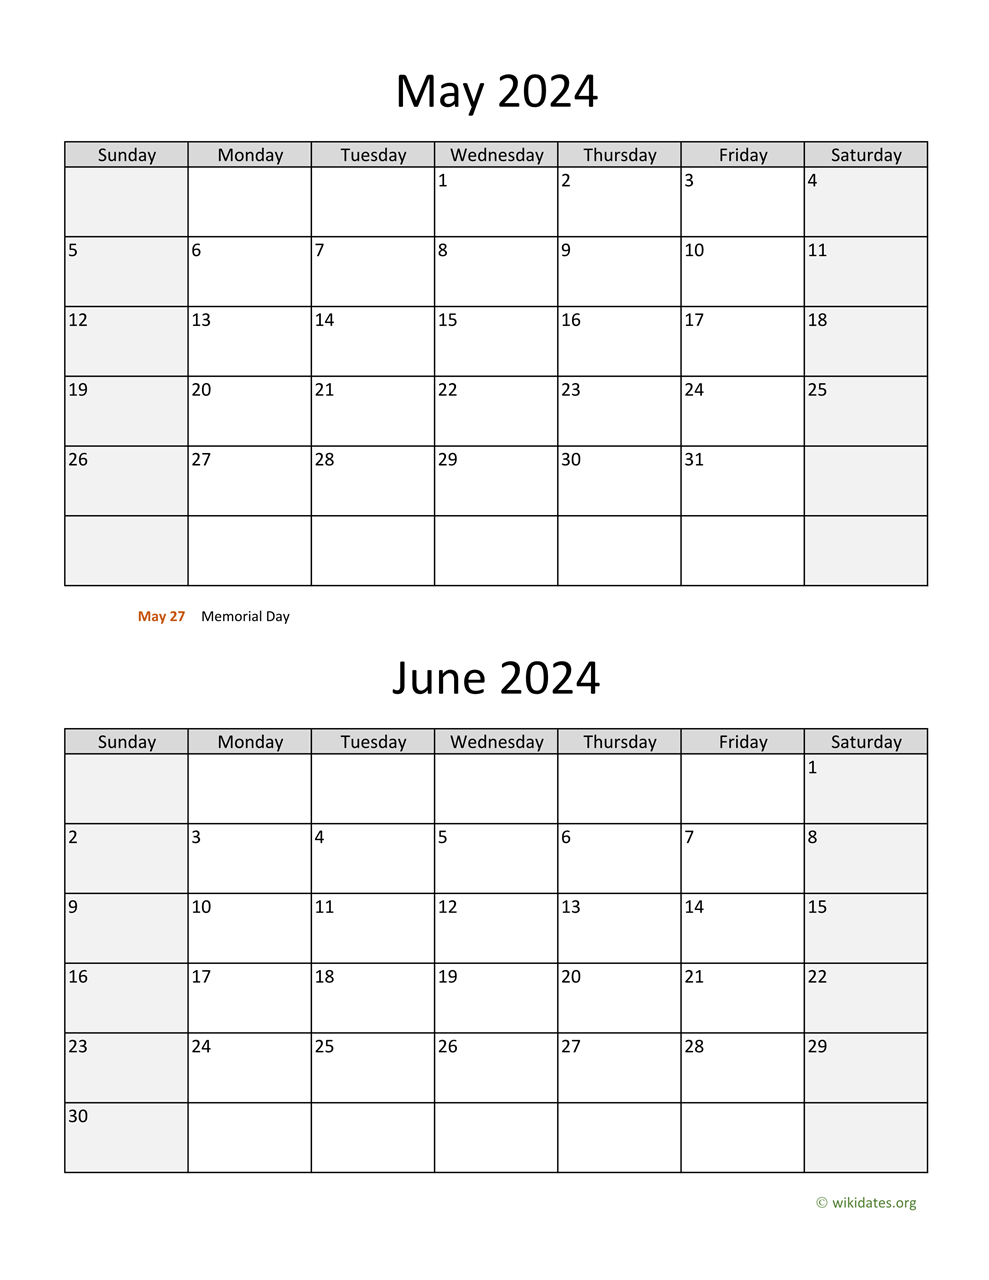 May And June 2024 Calendar | Wikidates for Printable Calendar 2024 May June July